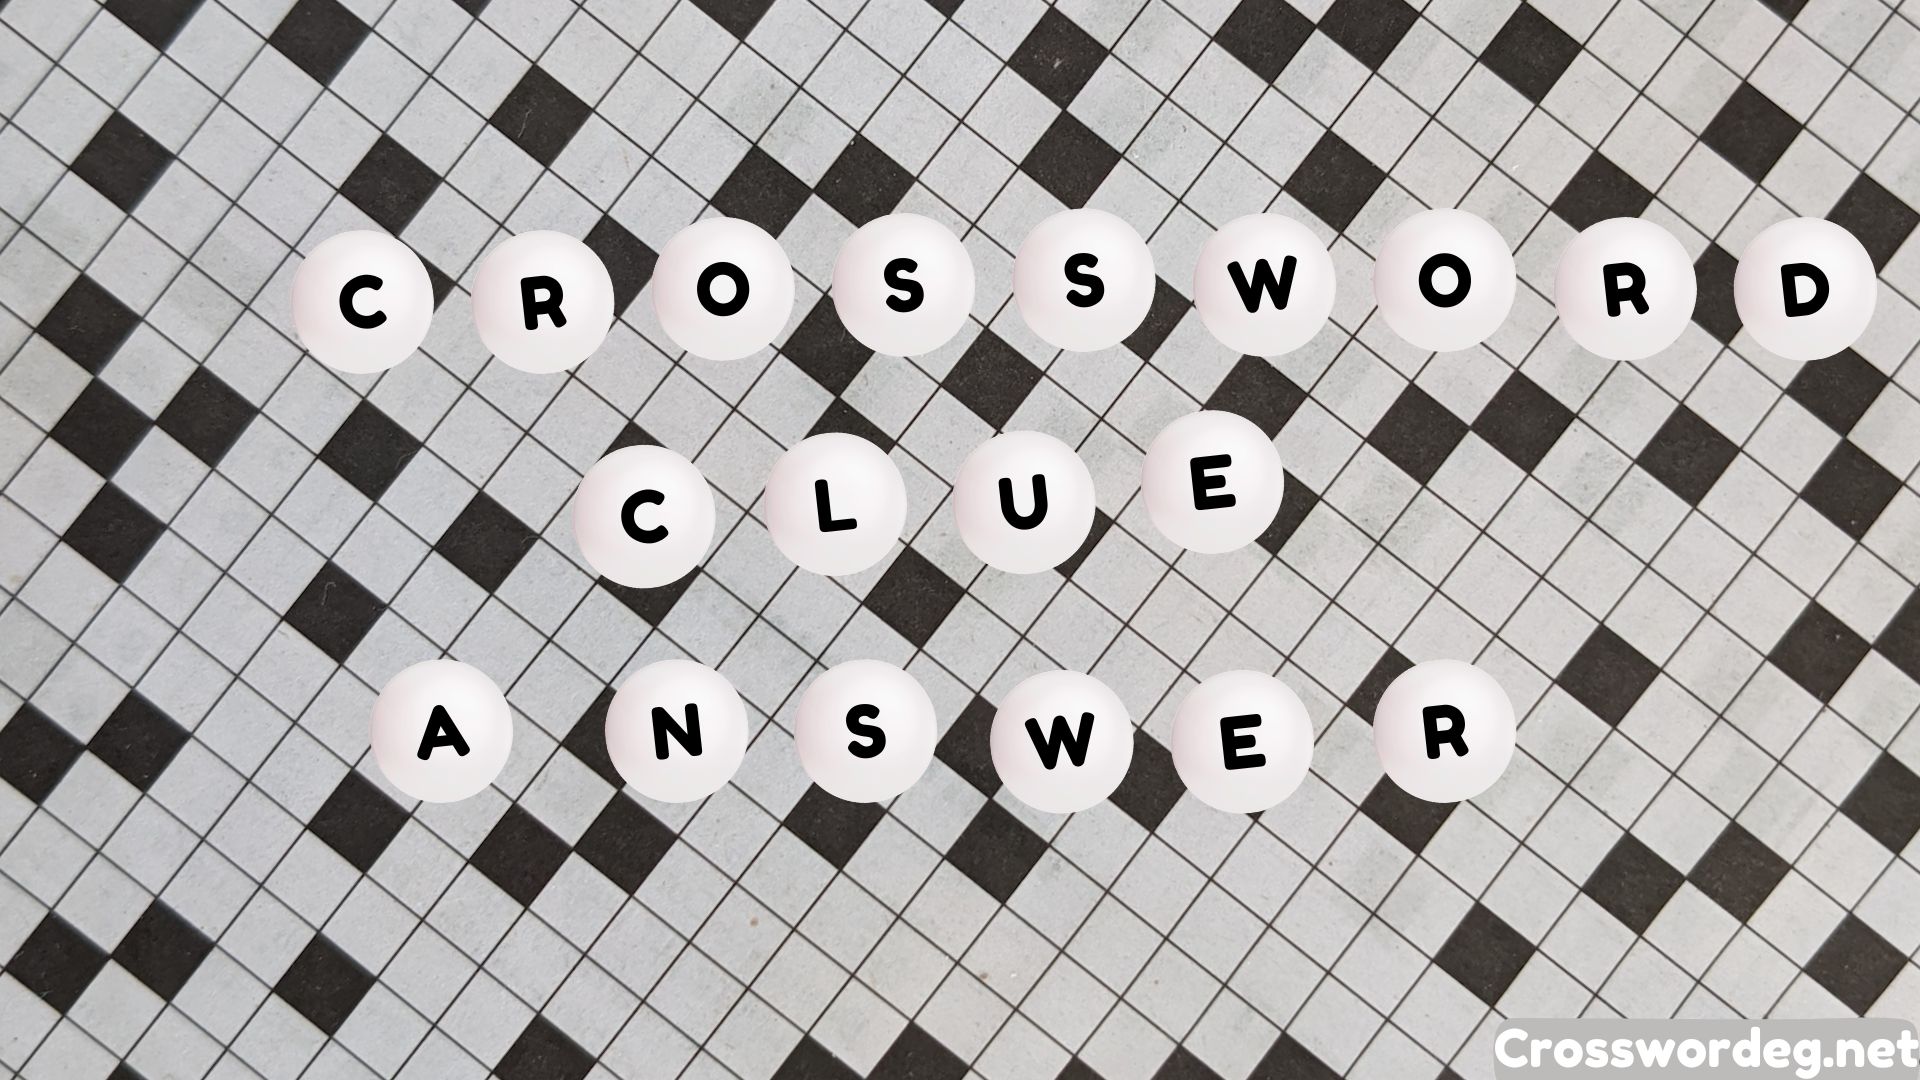 Cause trouble for Crossword Clue Answers Crosswordeg net